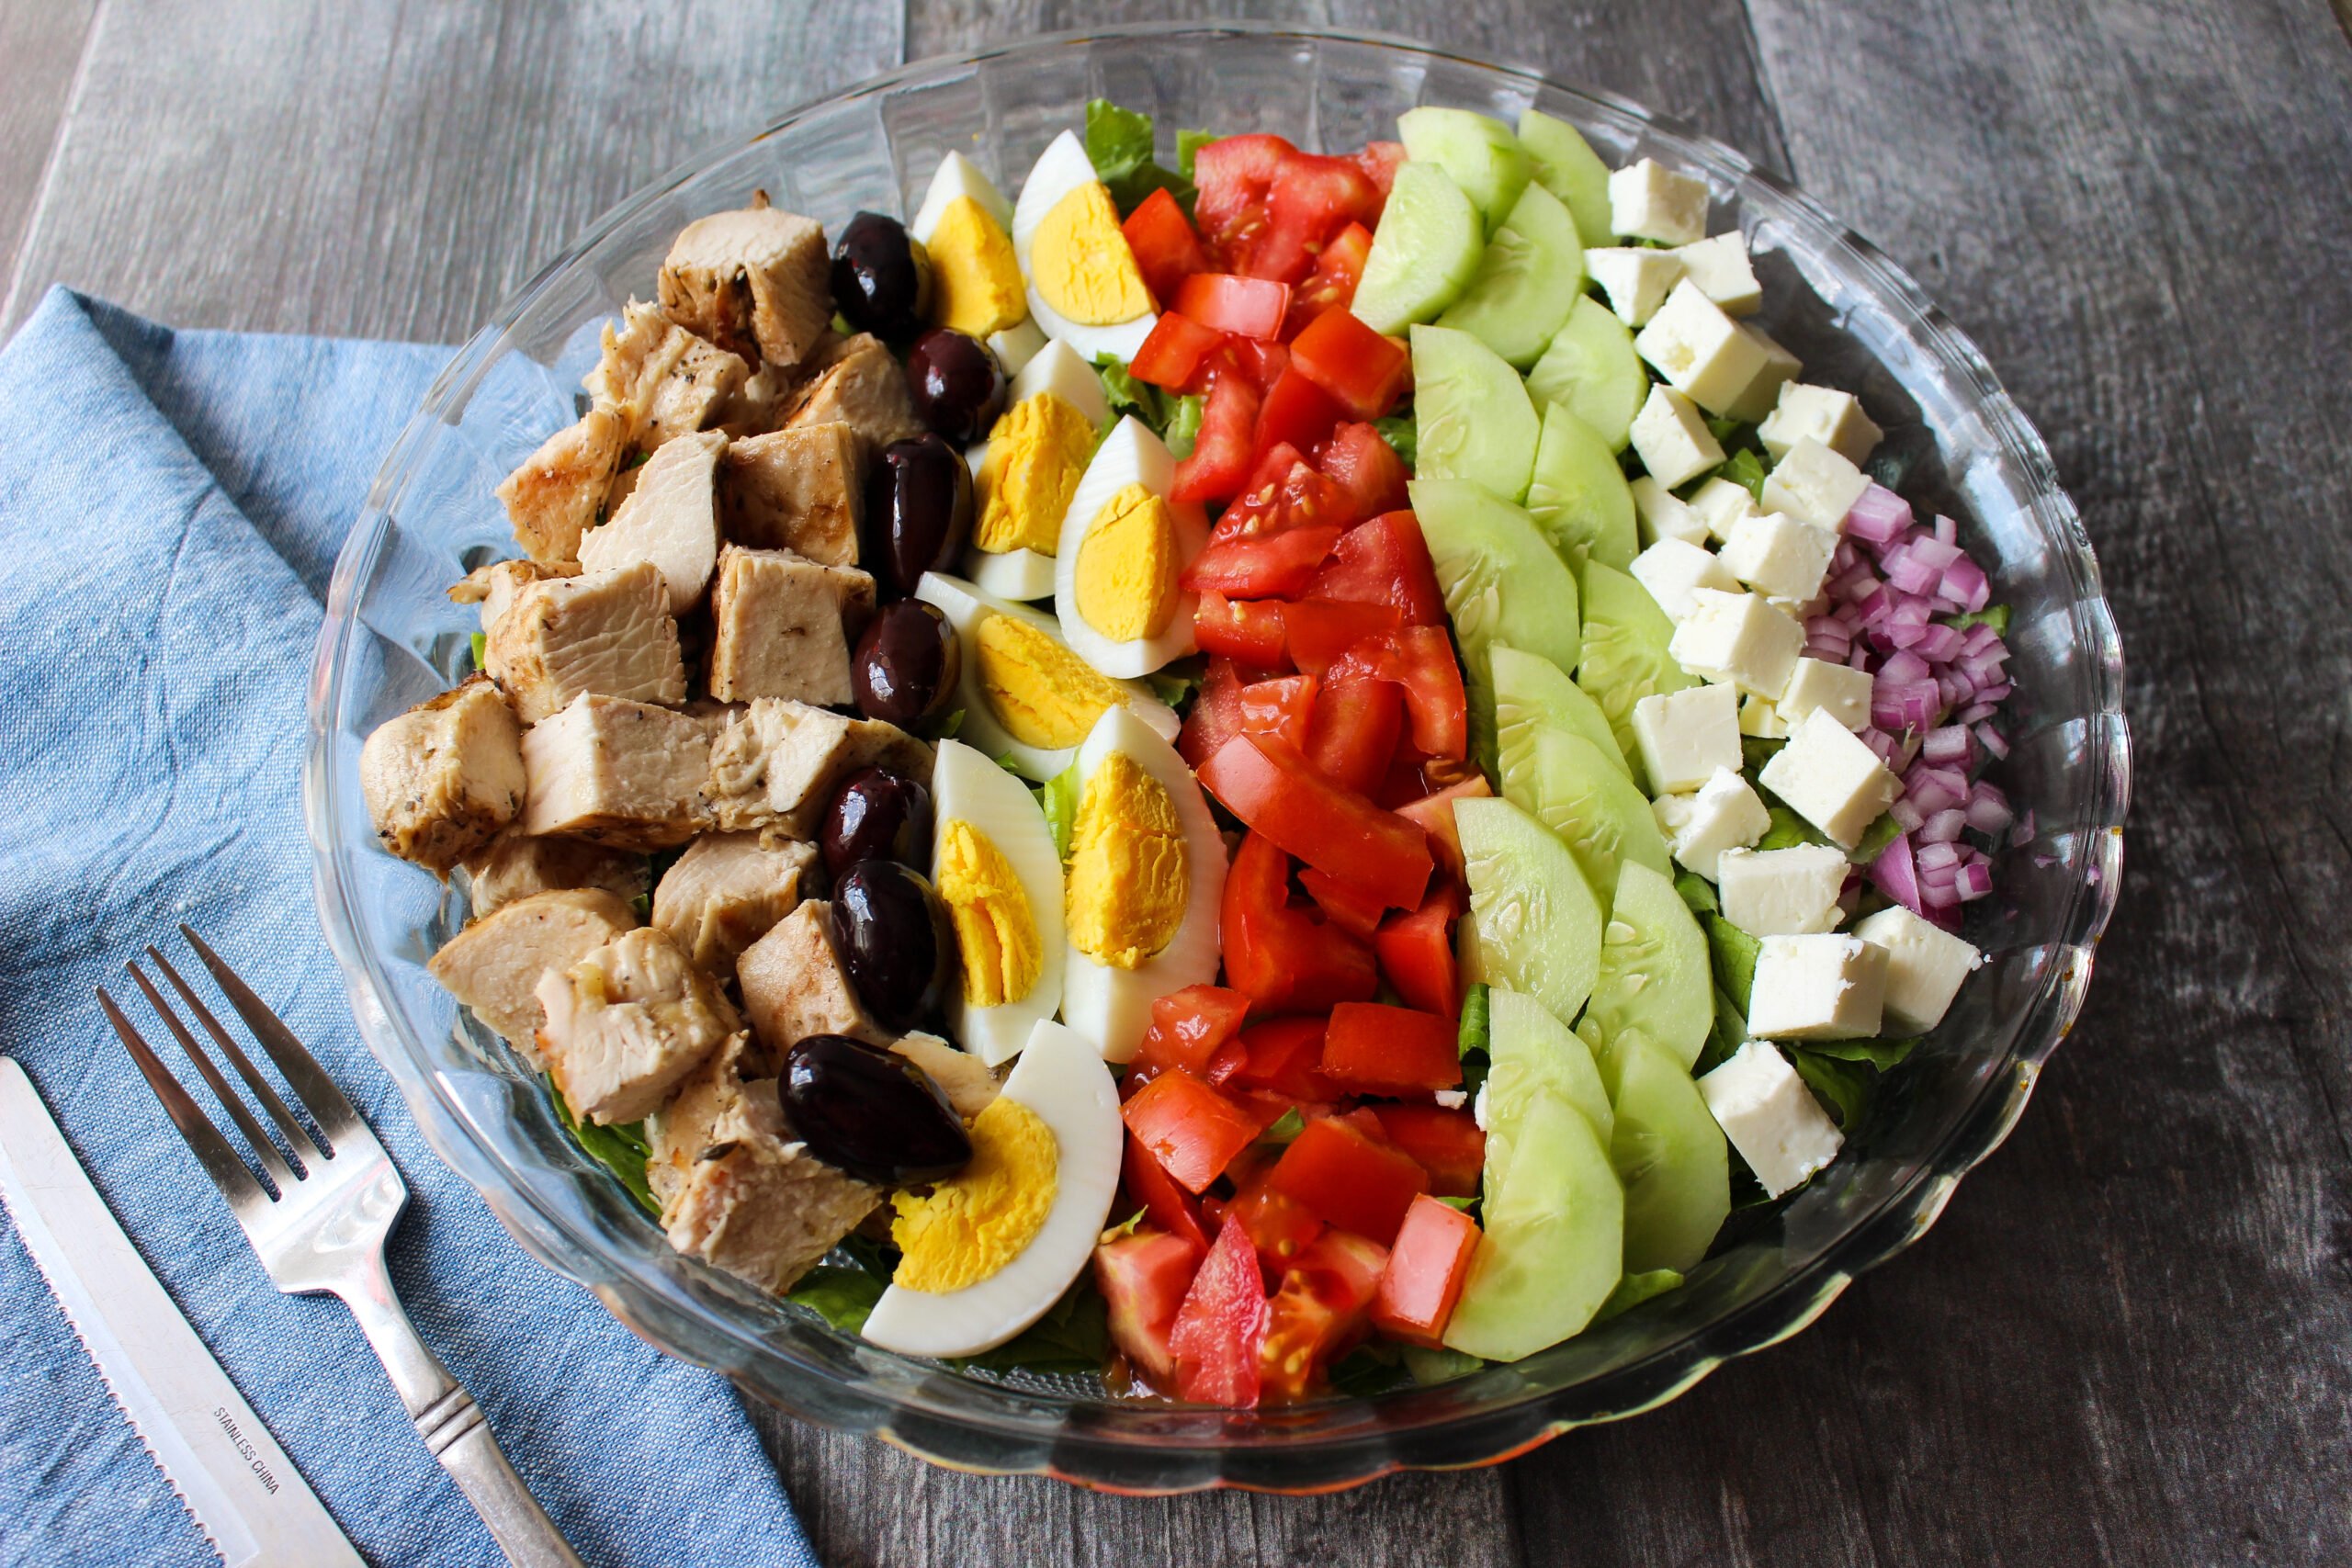 Greek-style Cobb salad